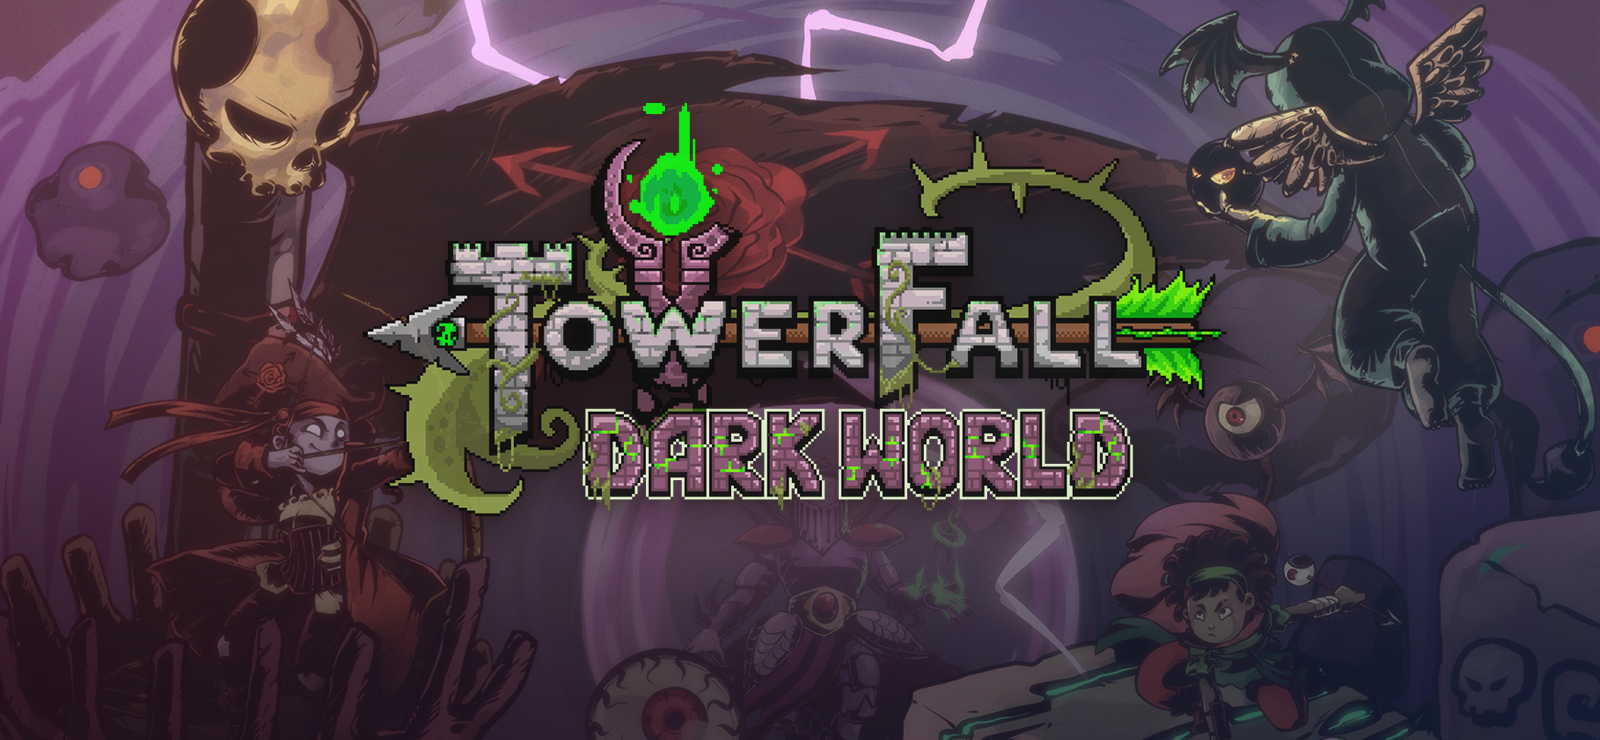 Towerfall: Ascension - Dark World